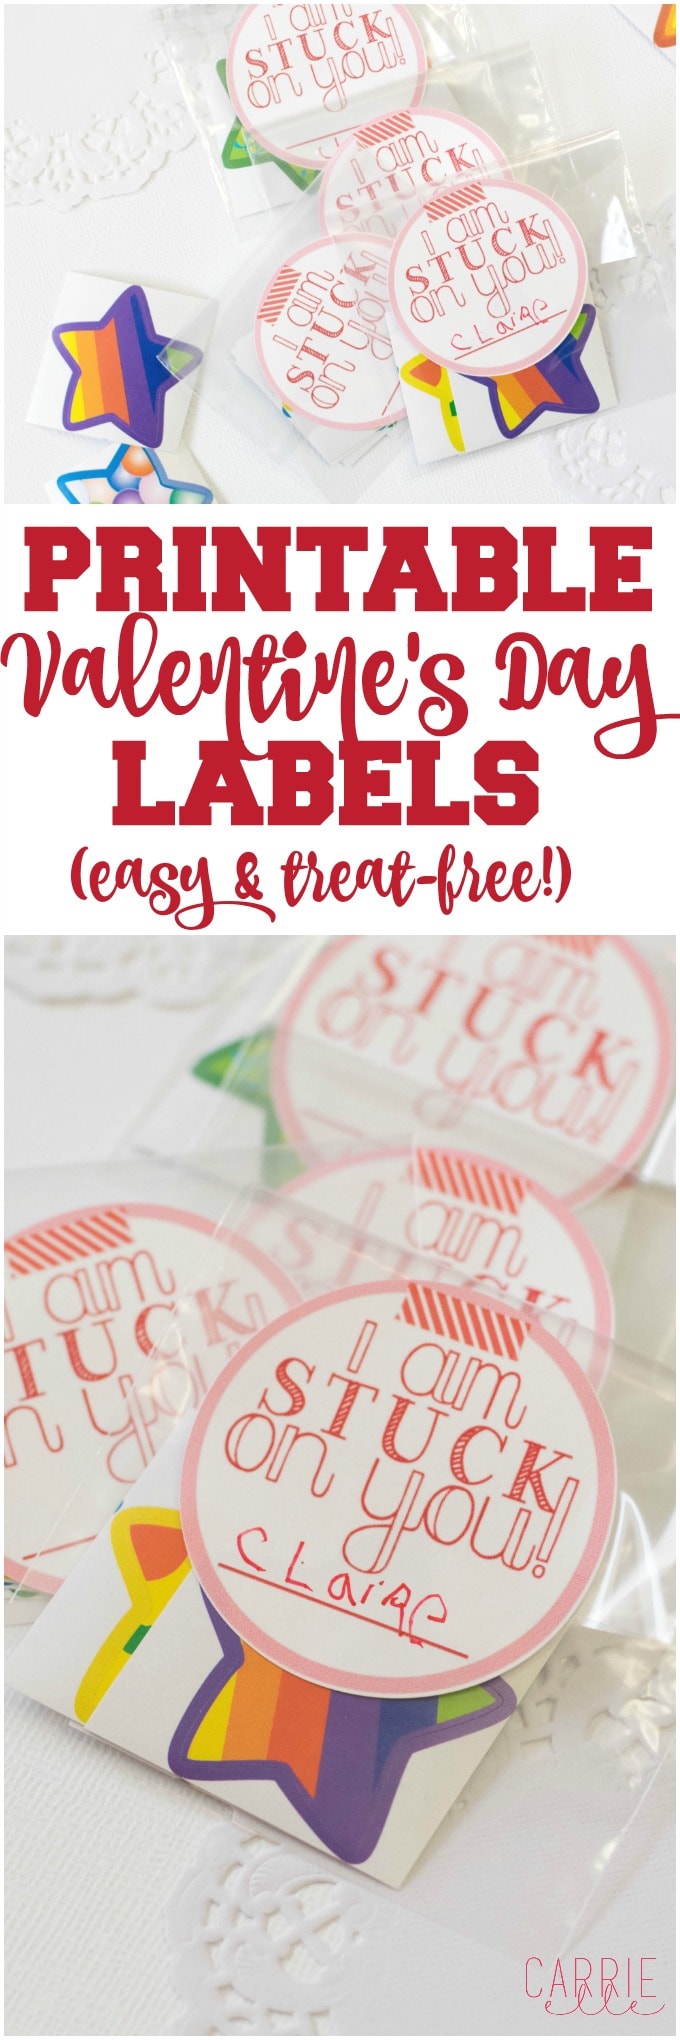 Printable Valentine's Day Labels